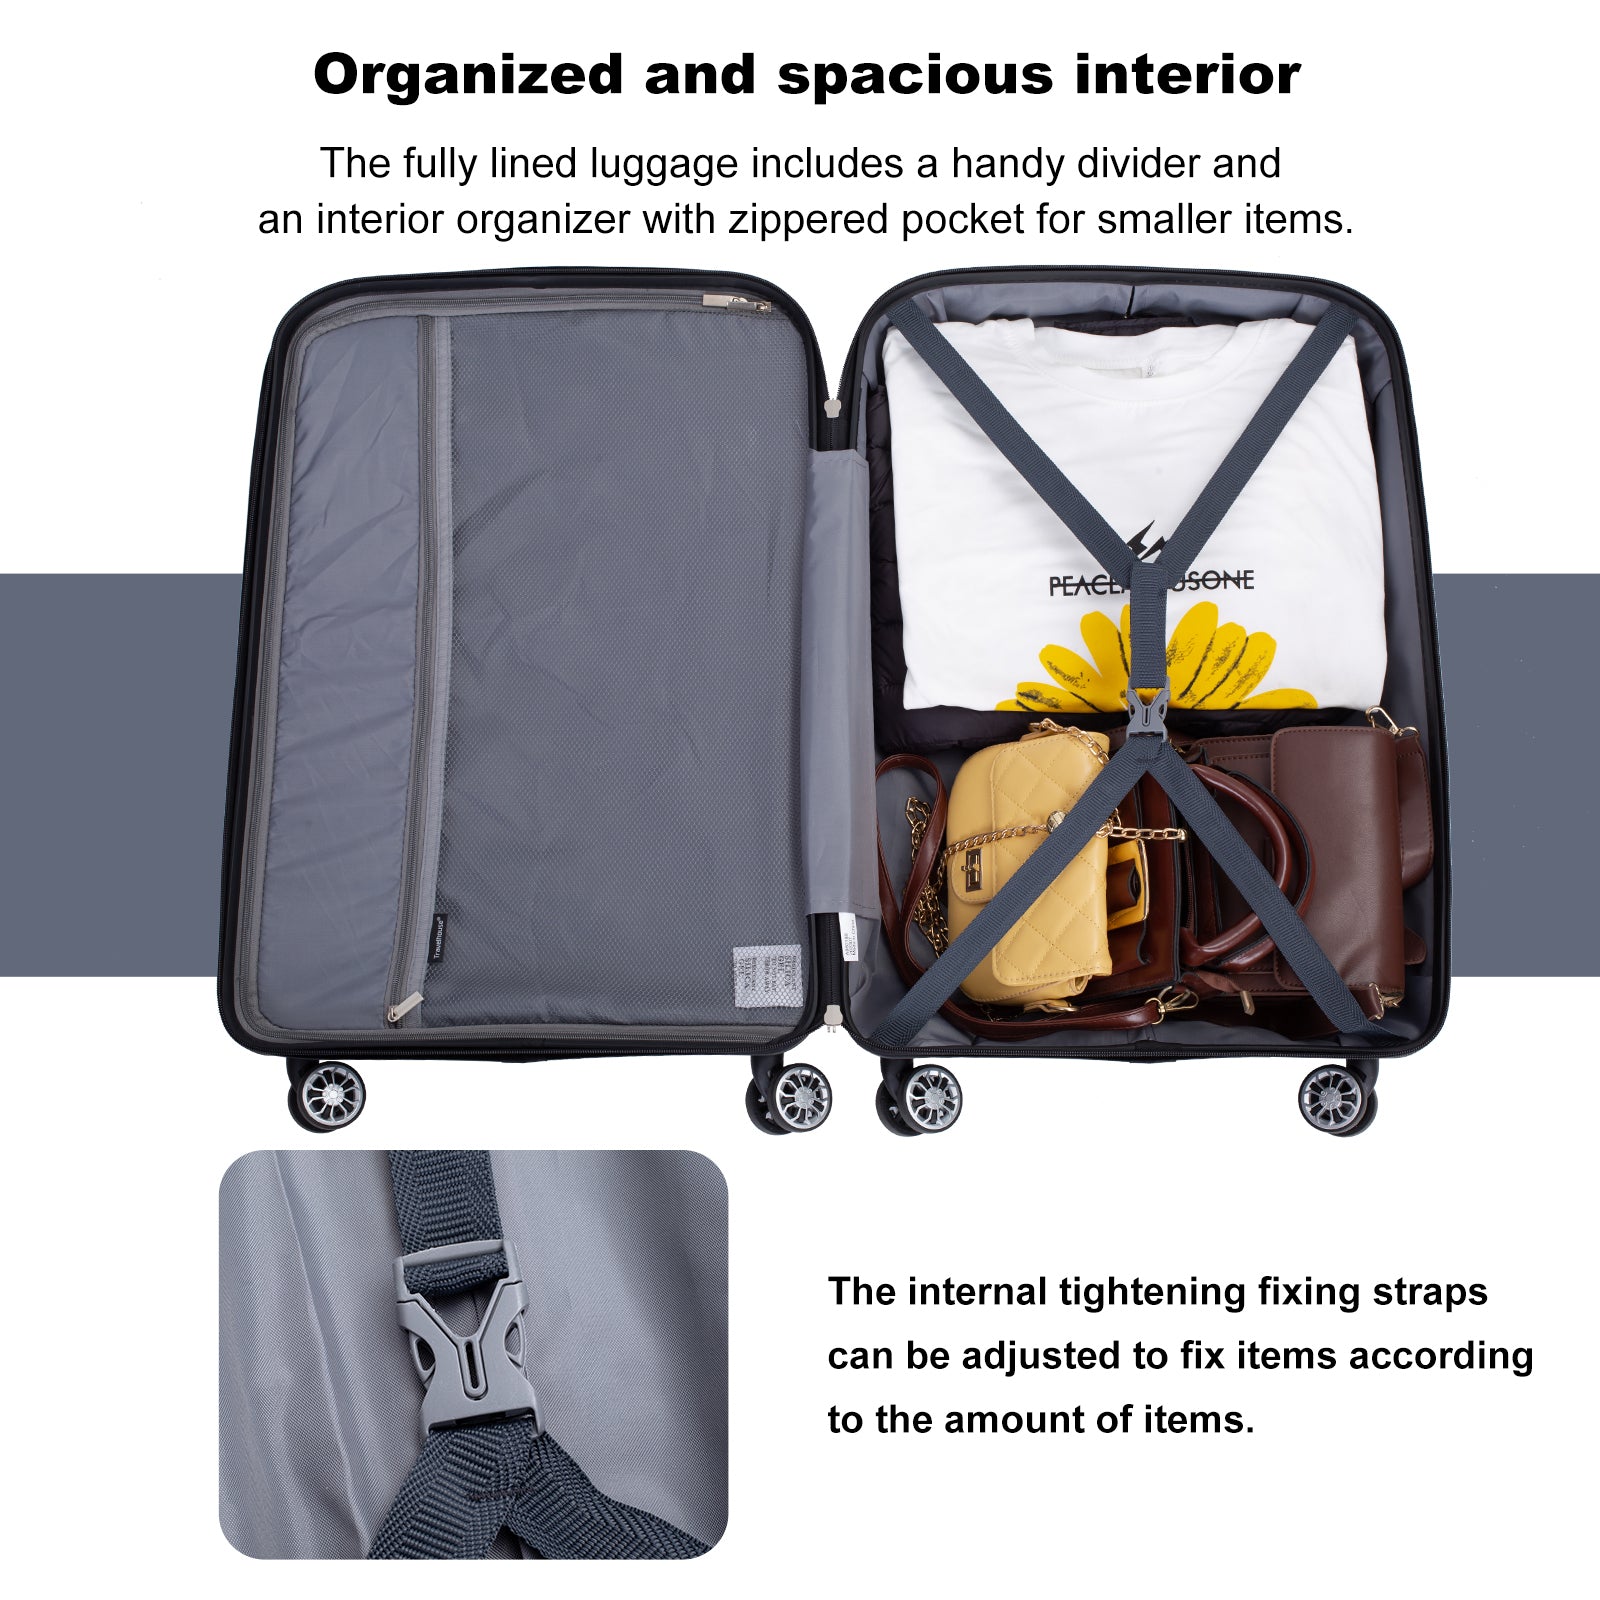 Hardshell Suitcase Spinner Wheels PP Luggage Sets gray-polypropylene